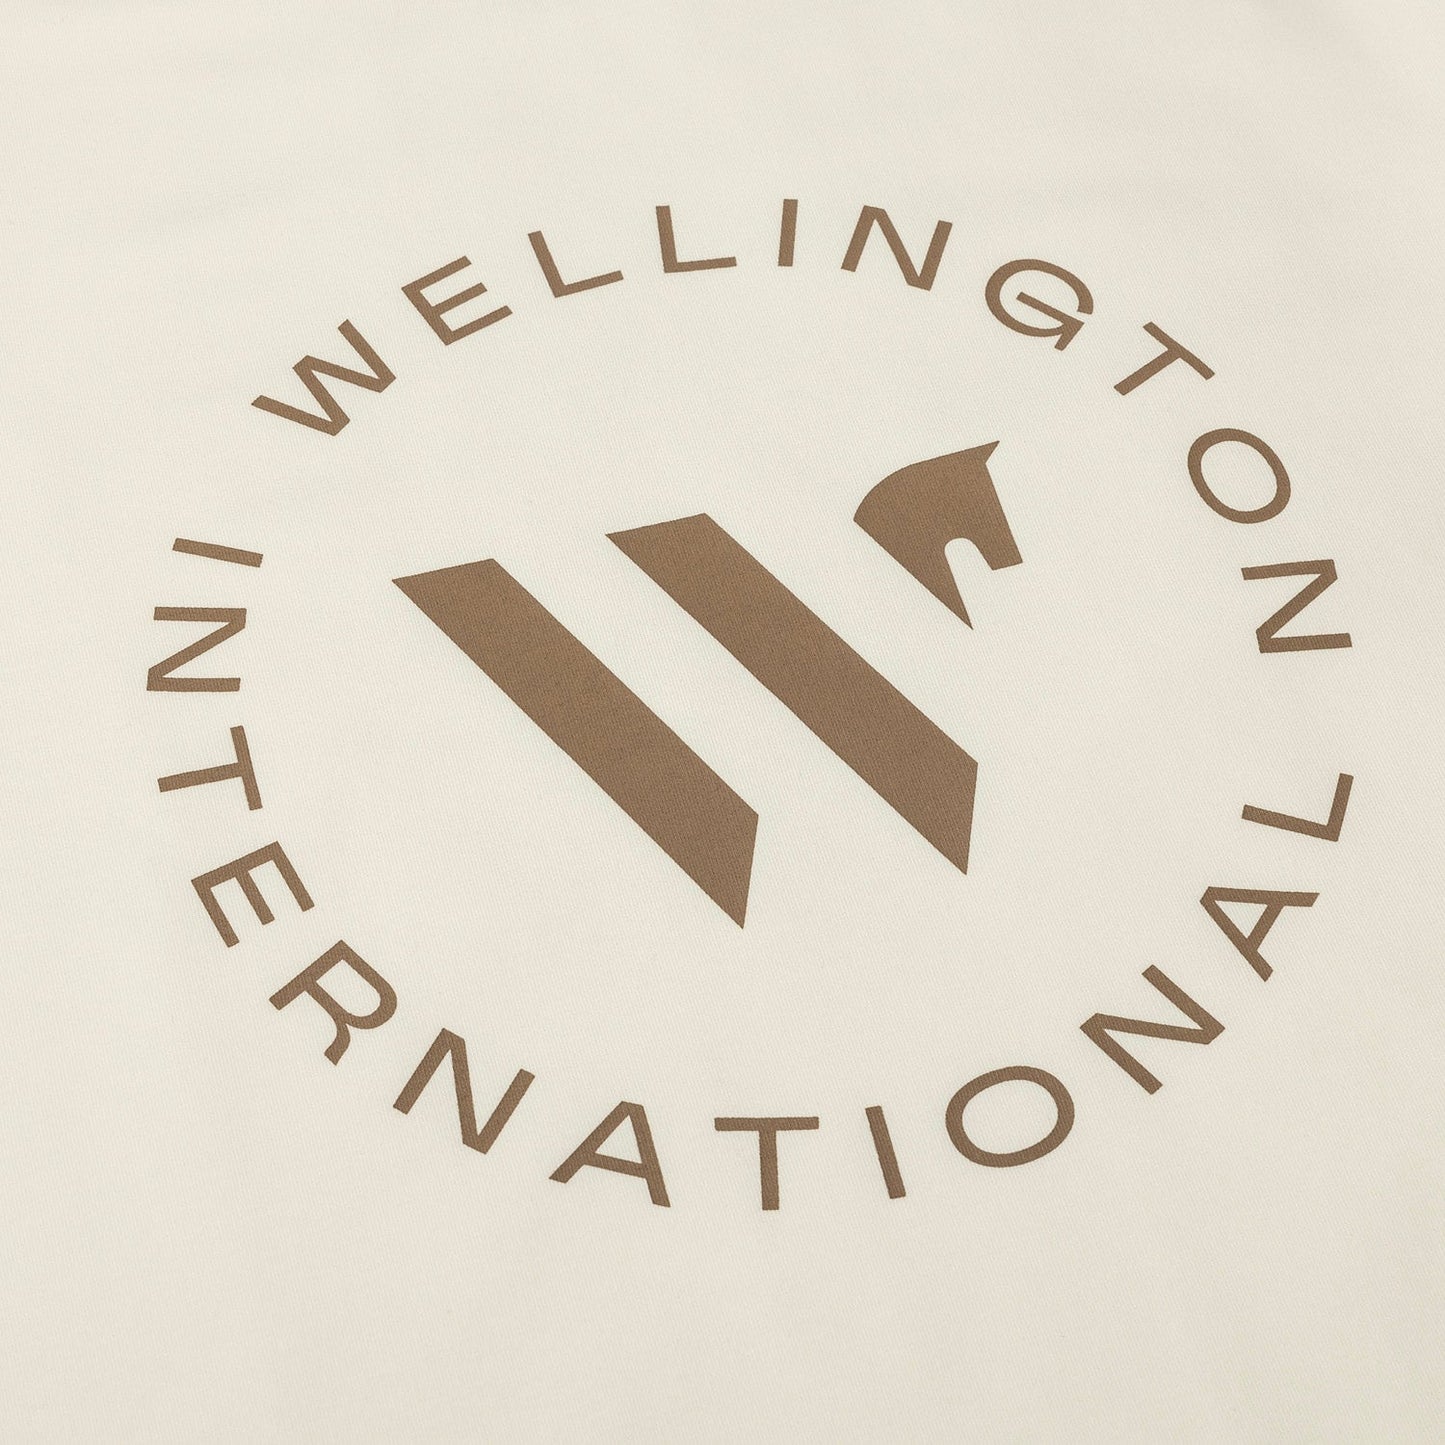 Wellington International Ladies Light Sweatshirt Round Neck